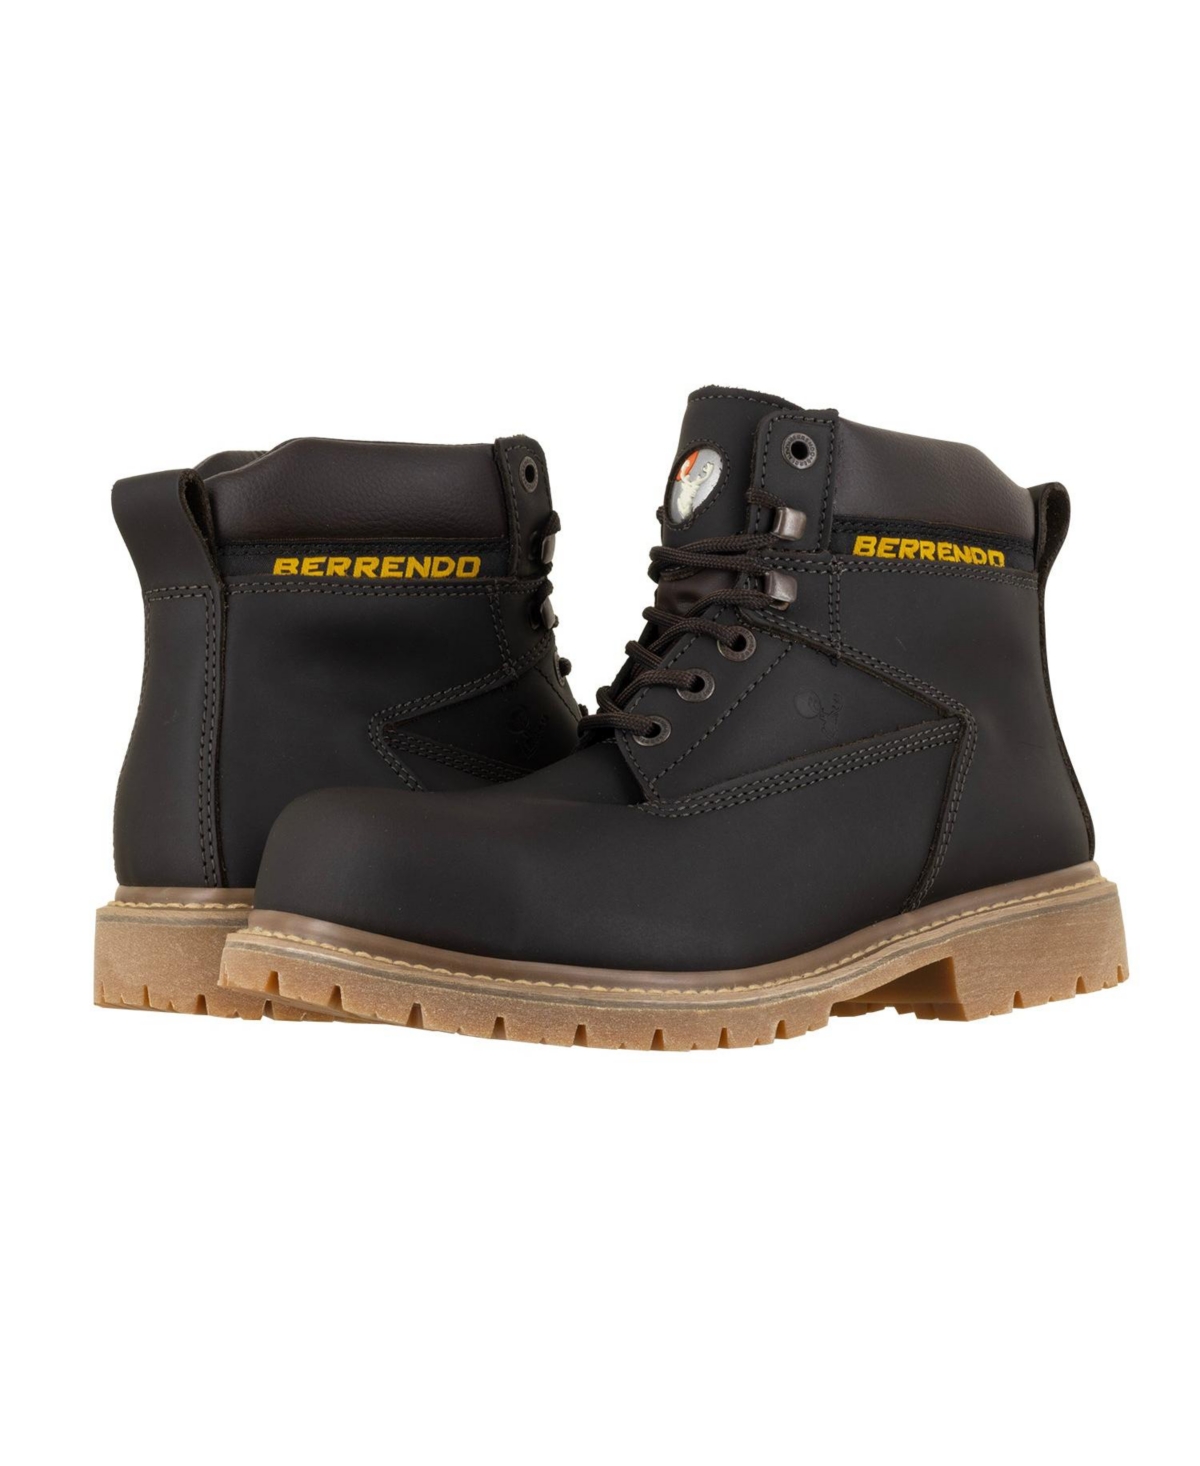 6" Steel Toe Work Boots for Men - Electrical Hazard - Oil and Slip Resistant - Black